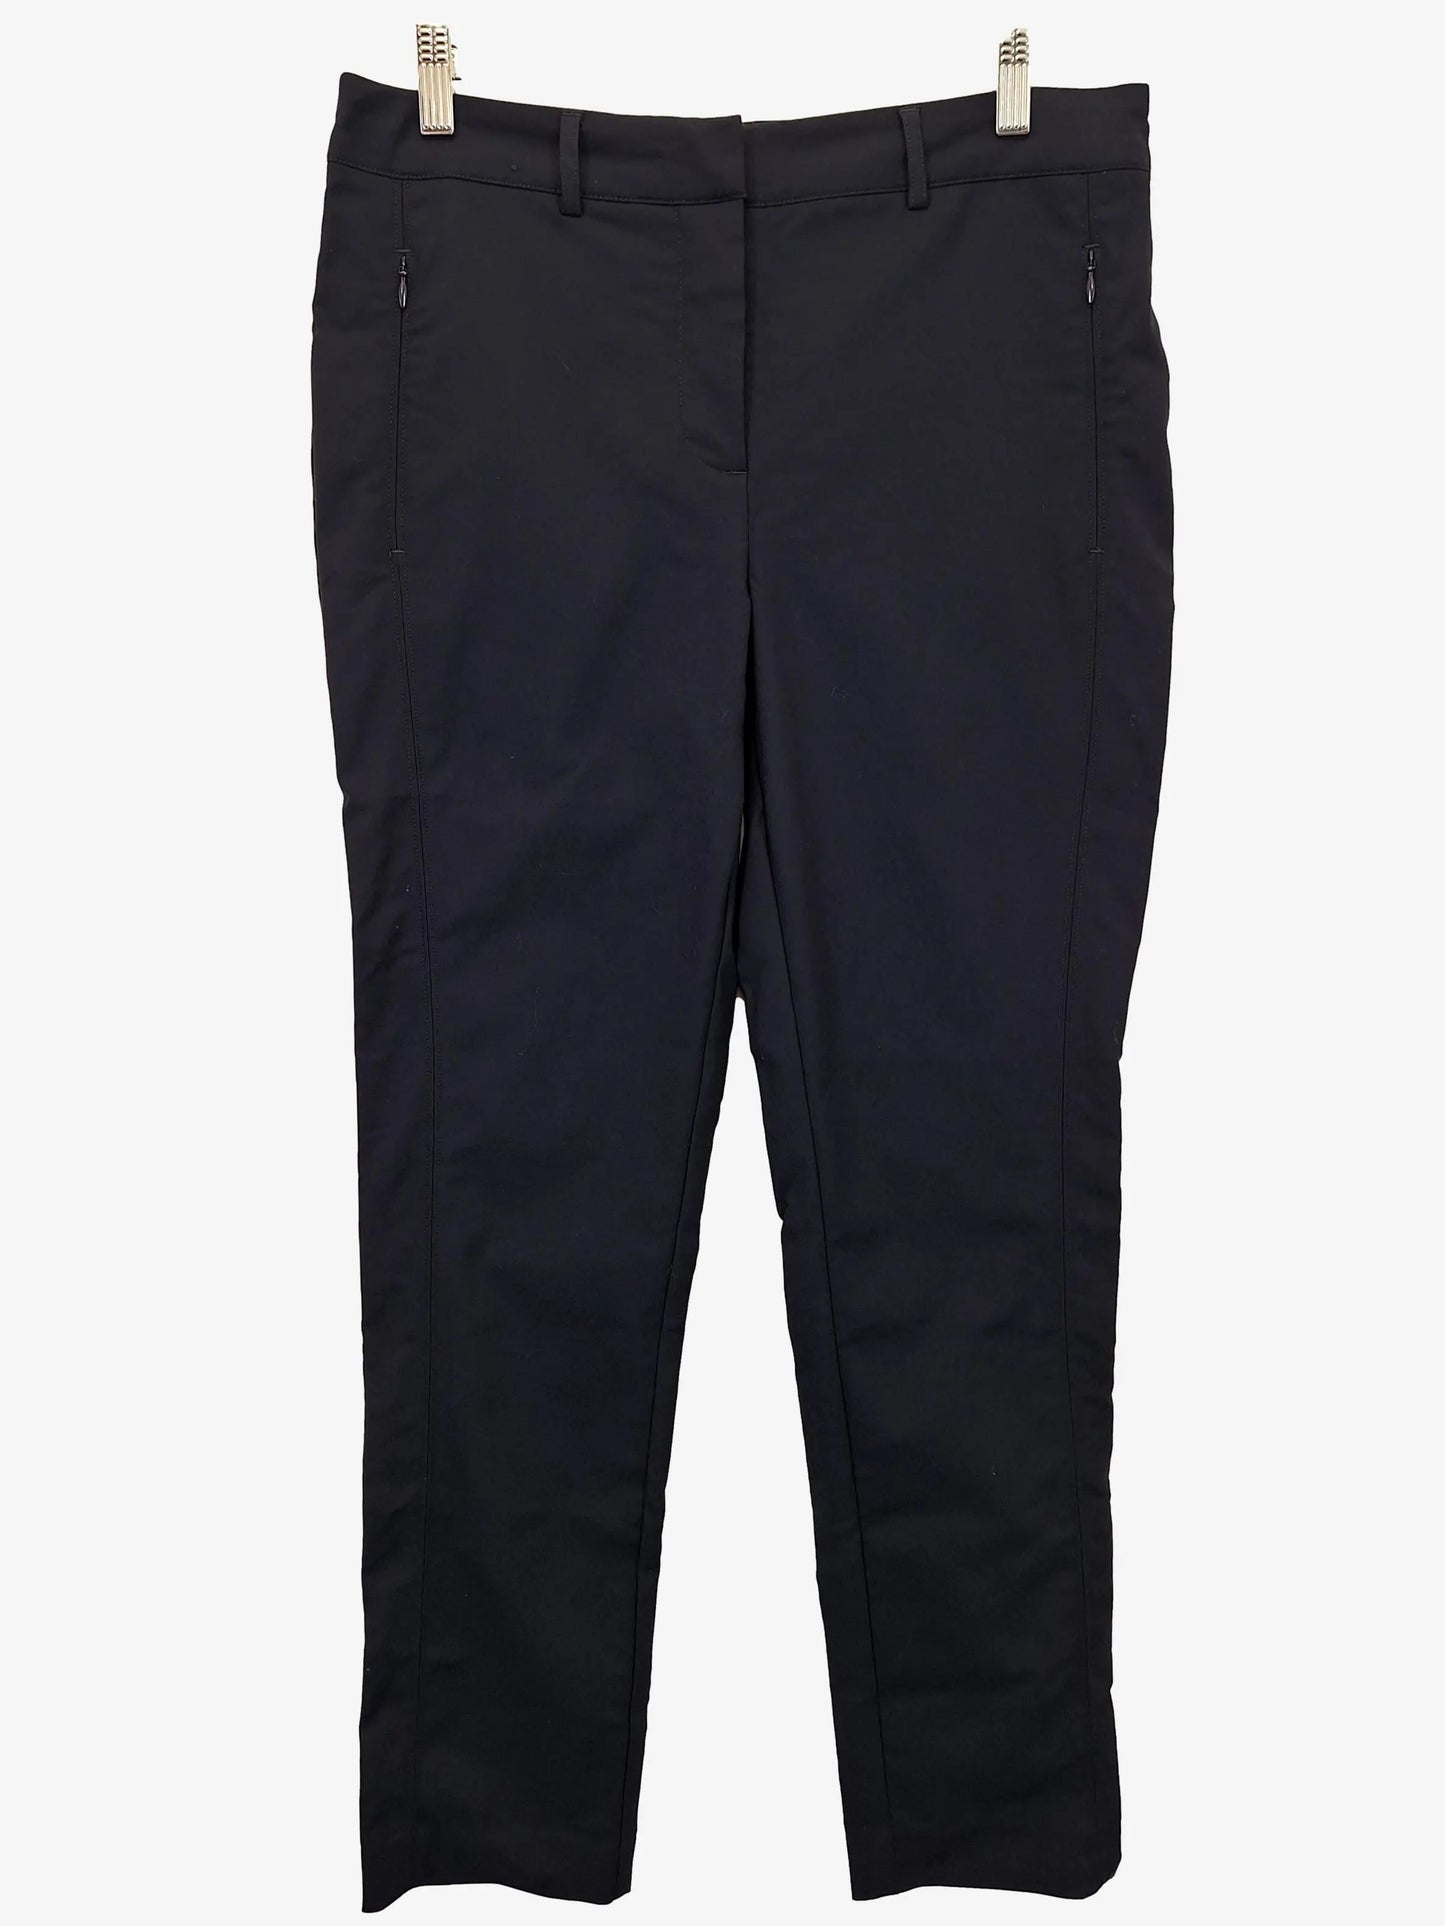 Jacqui E Navy Work Pants Size 10 – SwapUp